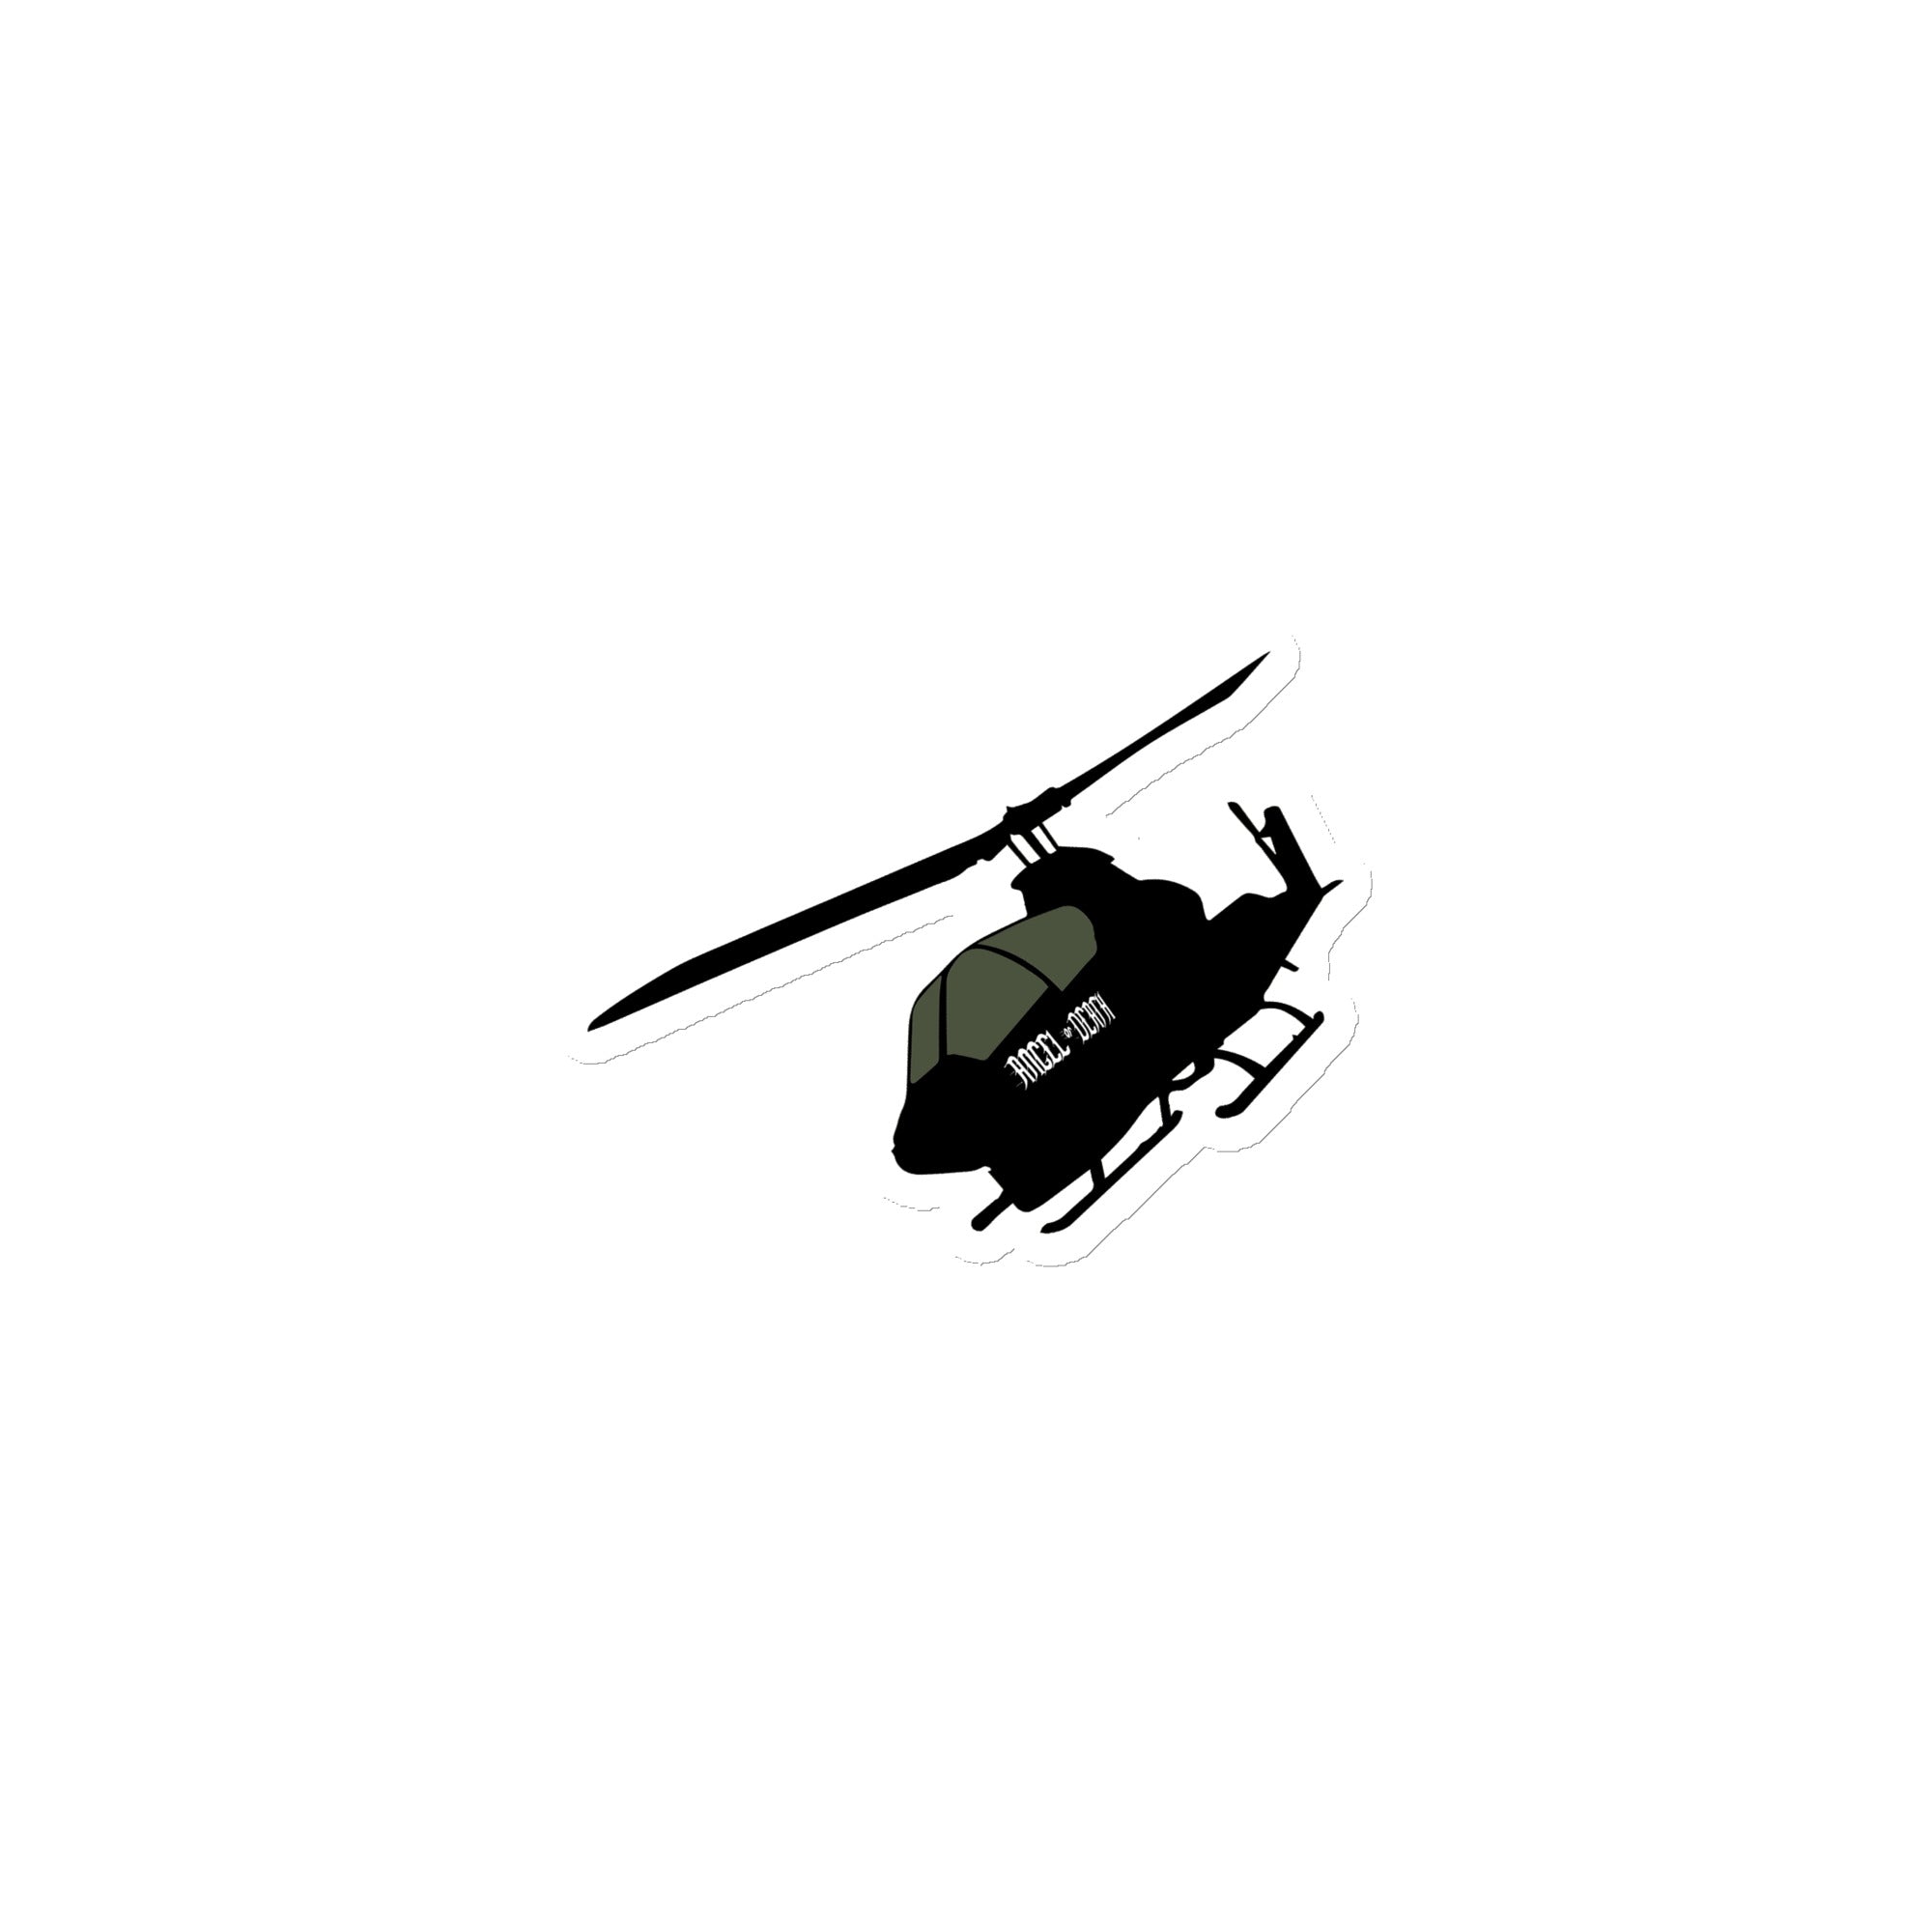 AH-1 Cobra "Angel of Death" Die Cut Magnet - I Love a Hangar